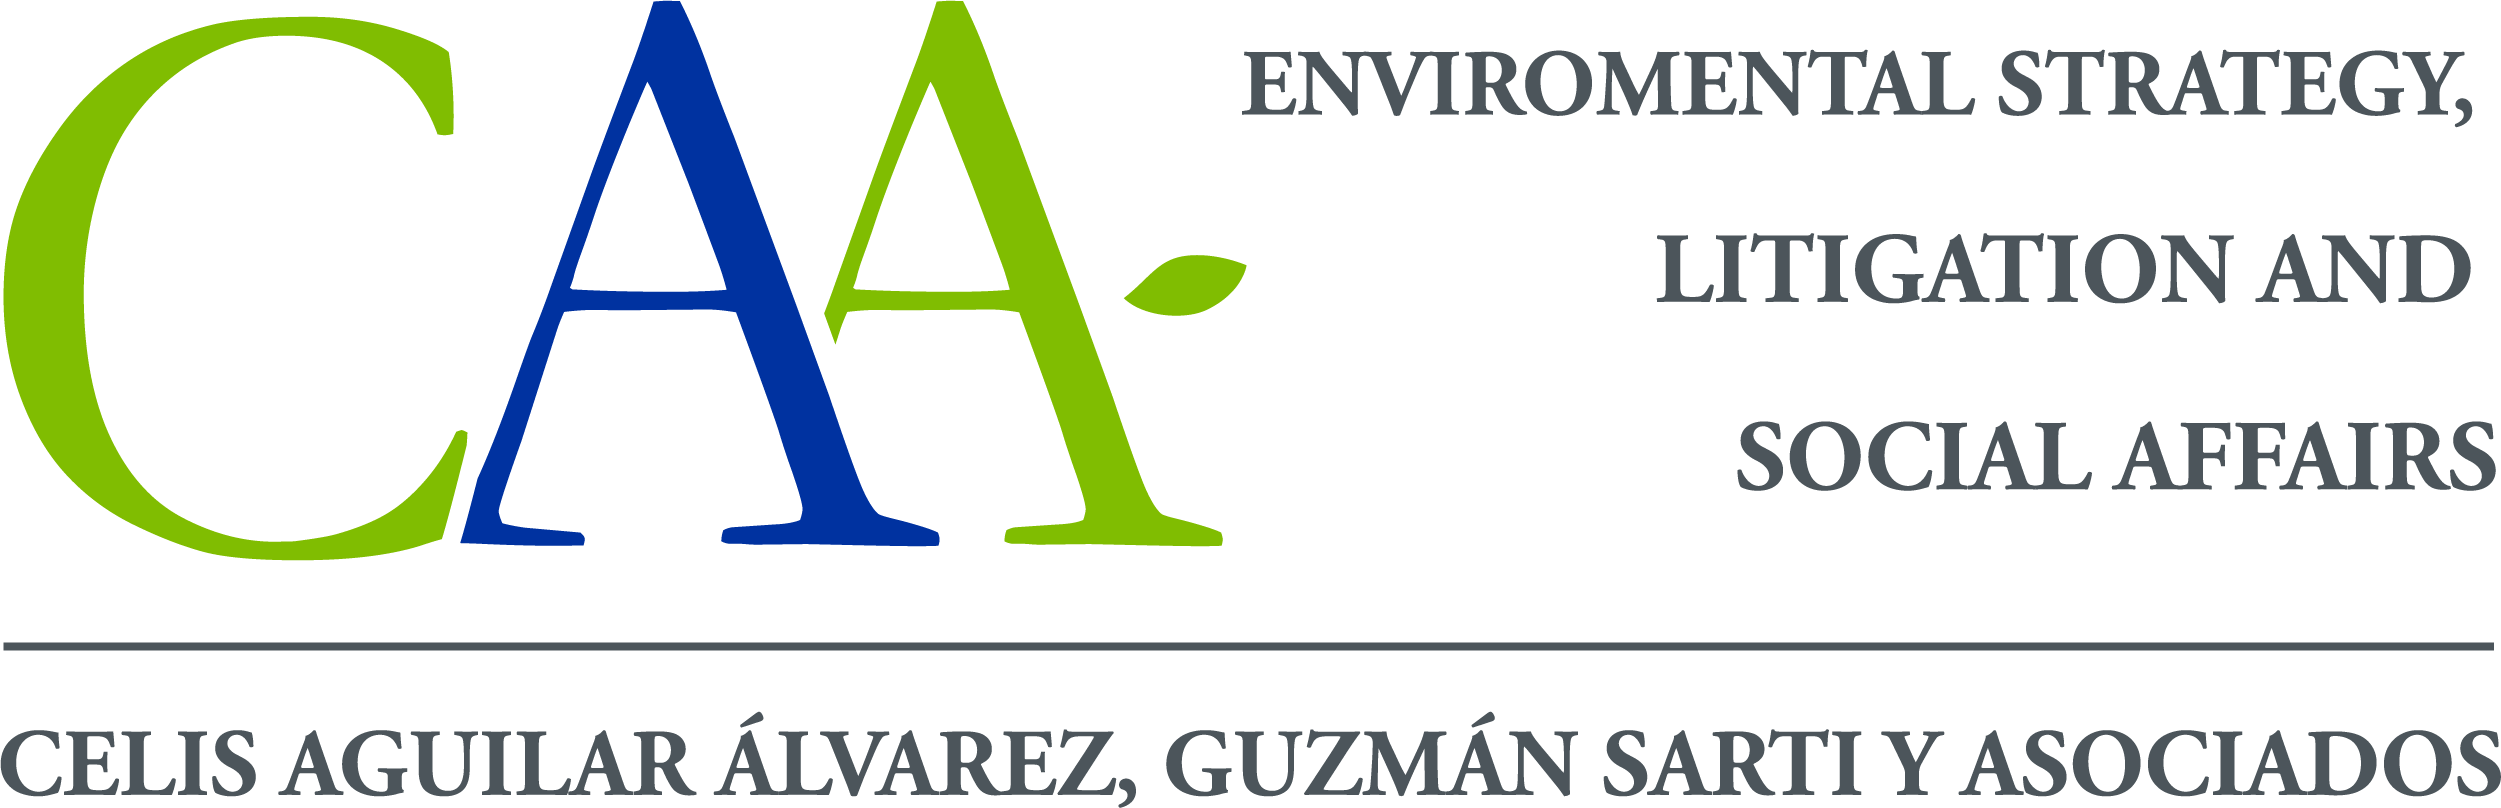 Environmental lawyers